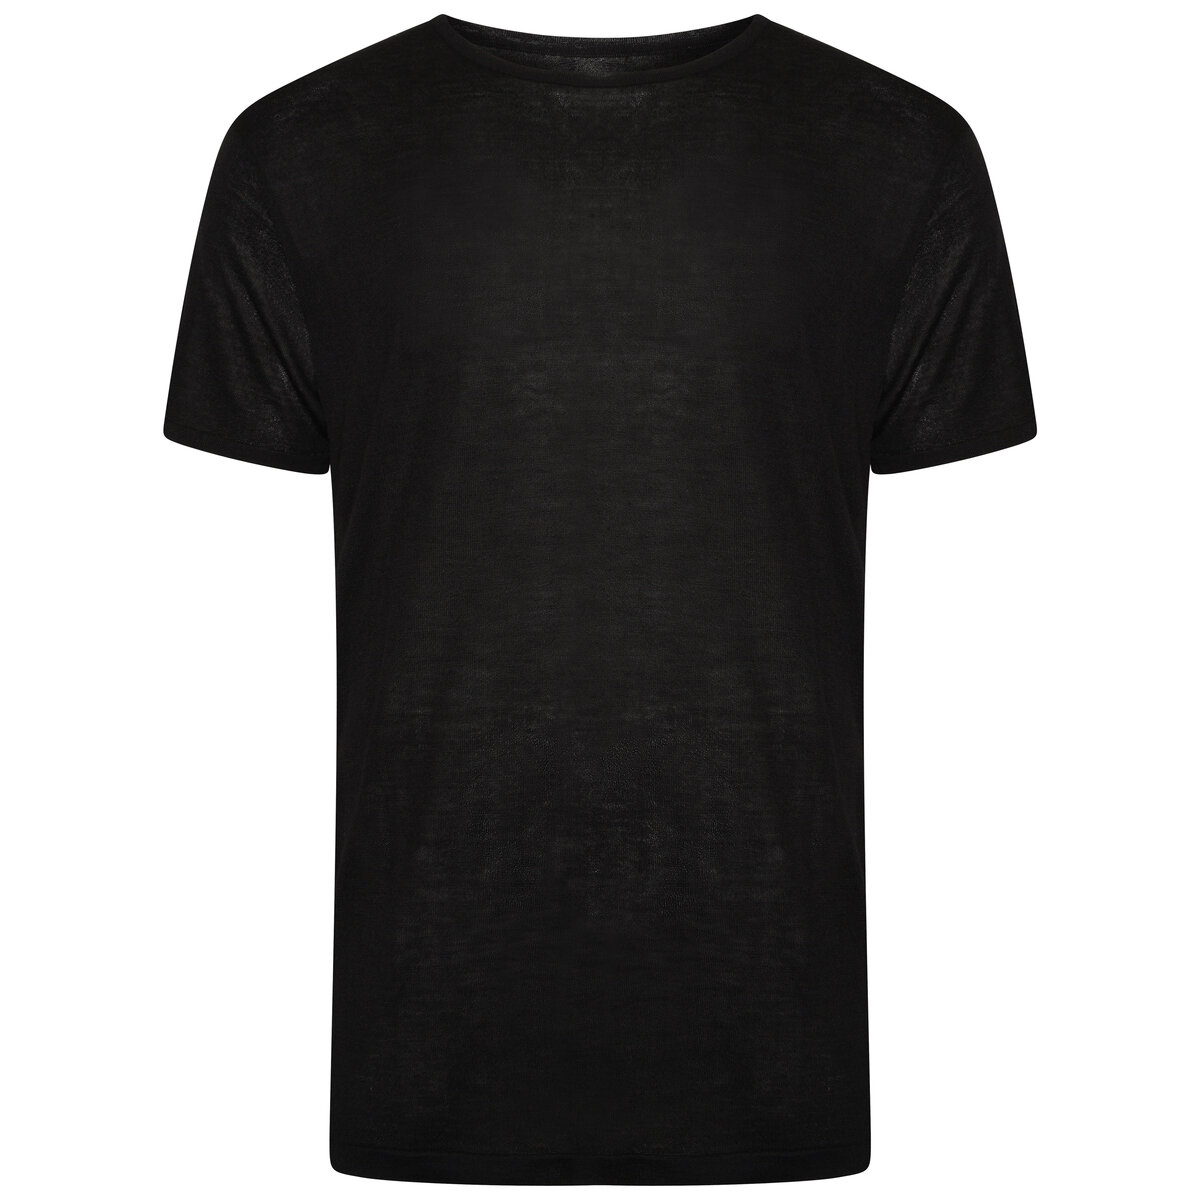 New Orleans Cashmere Round-neck T-shirt Xl Black